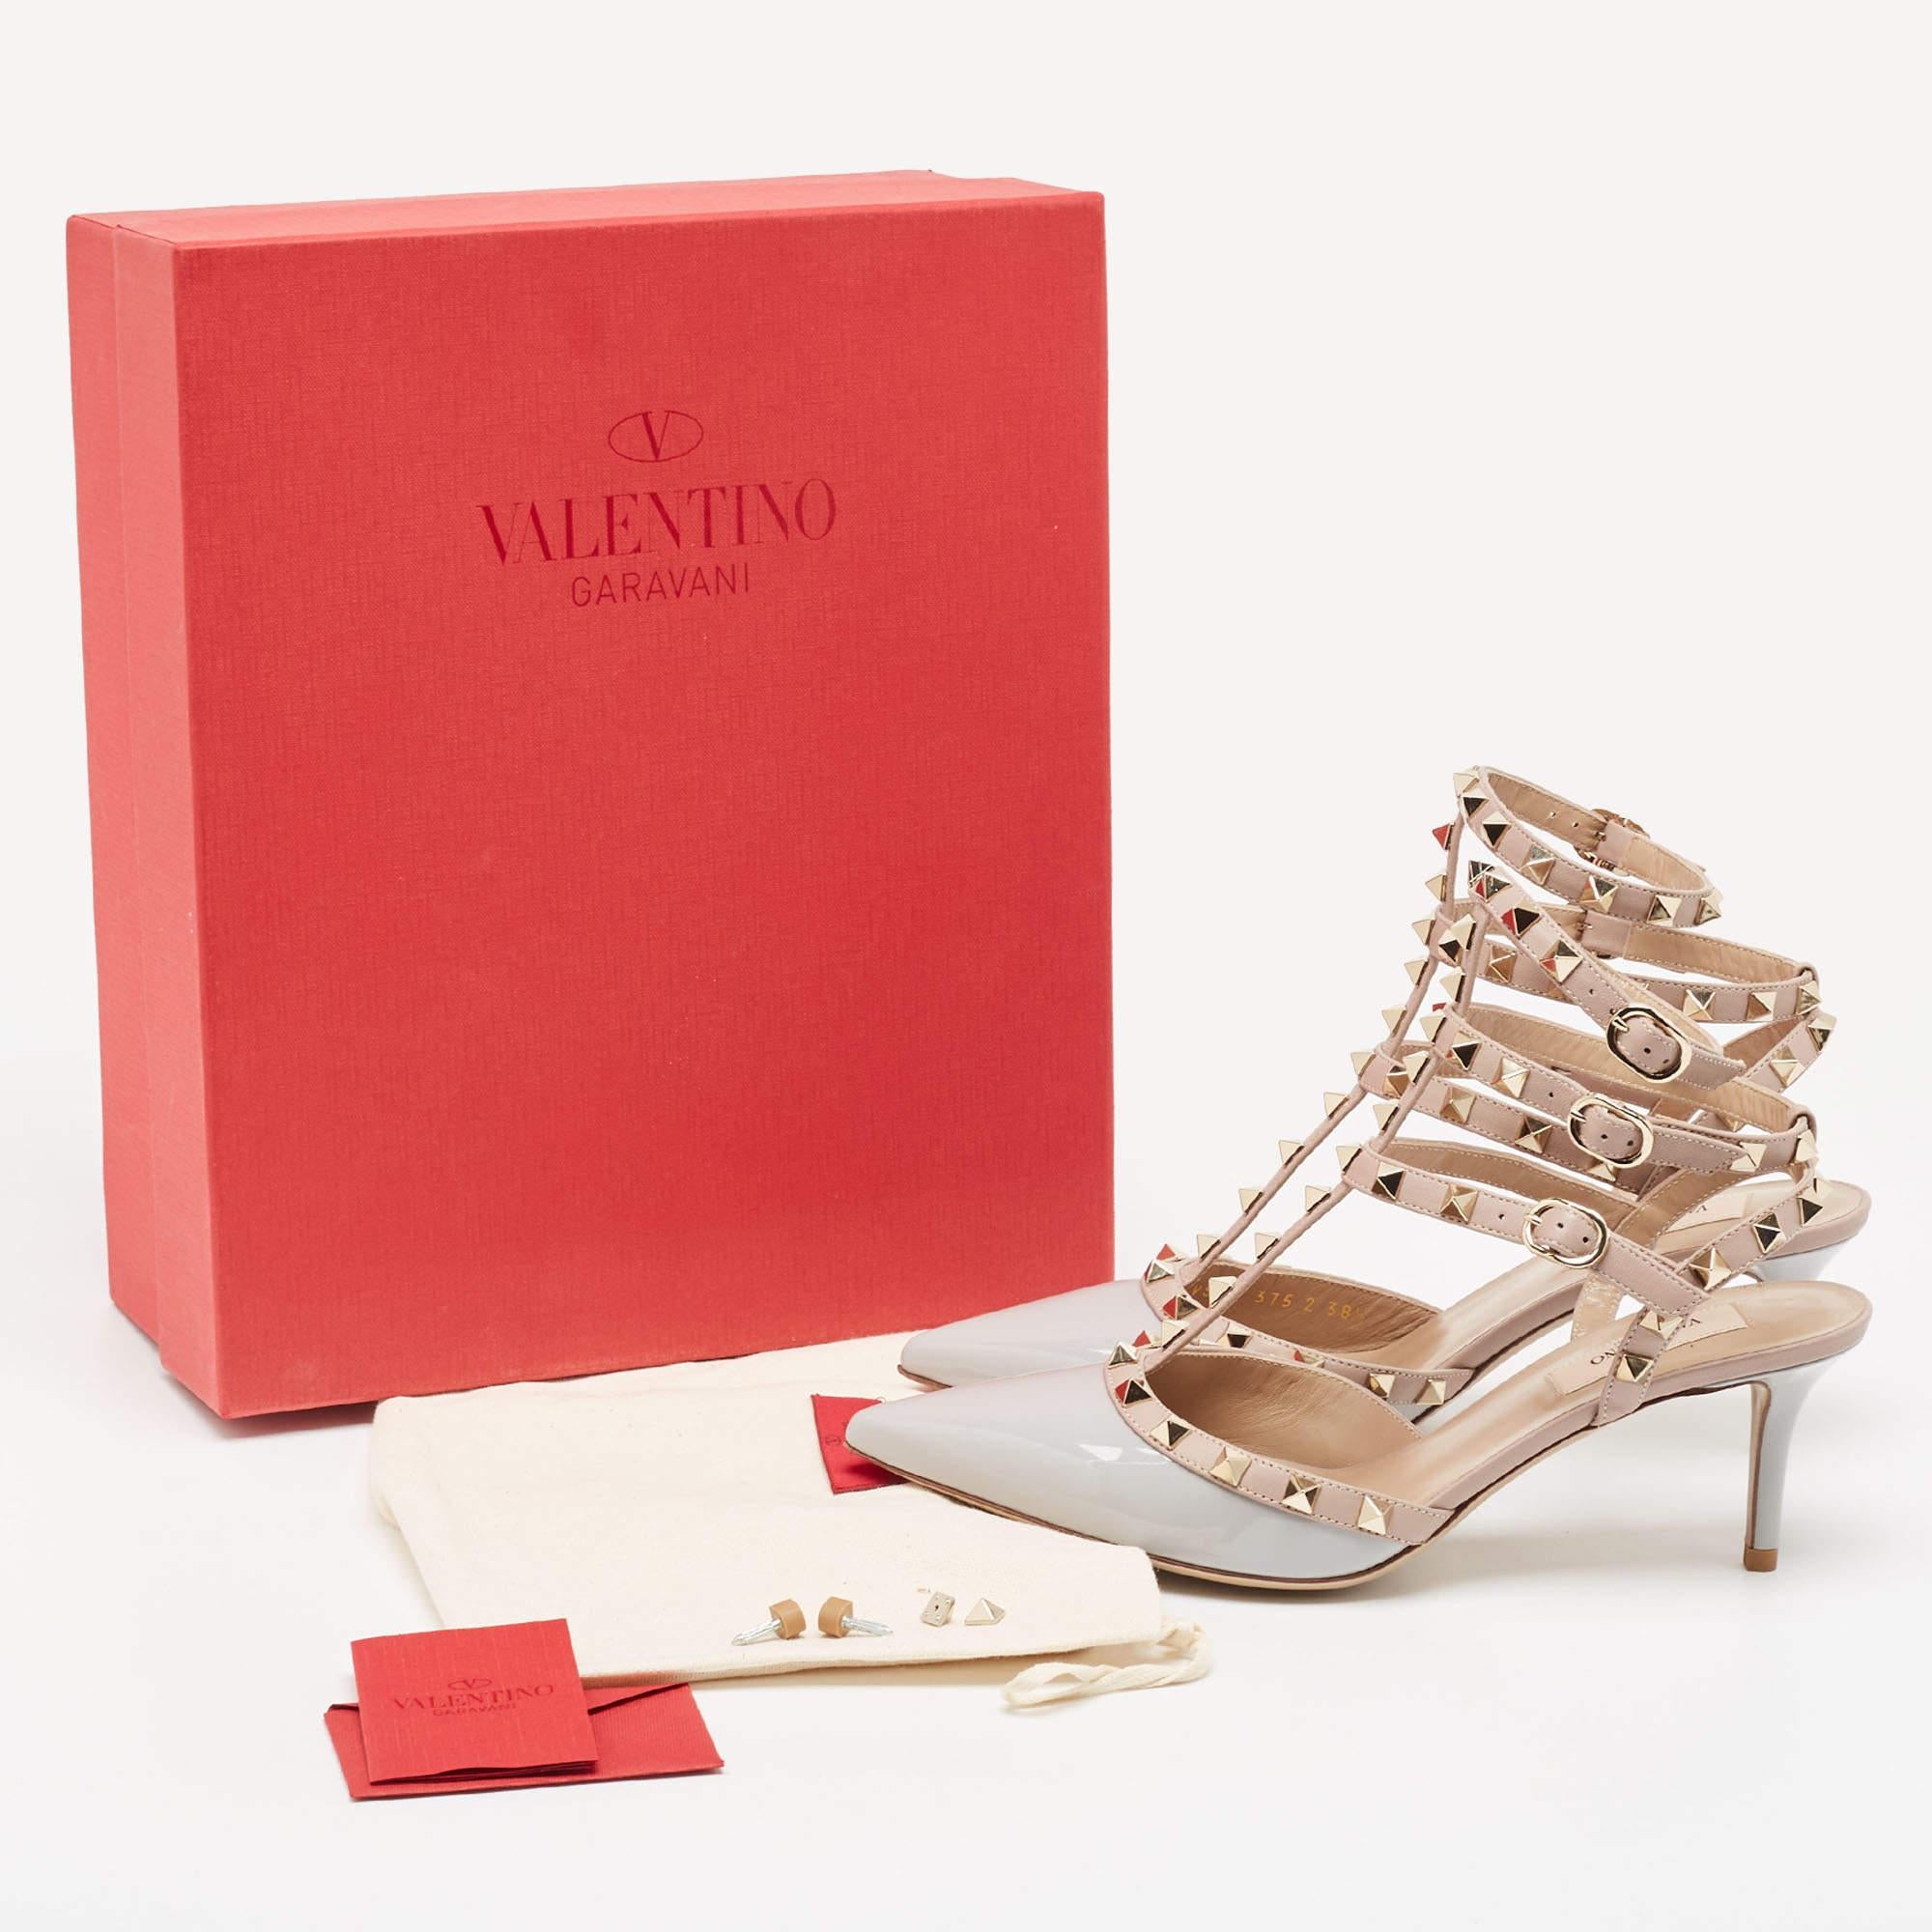 Valentino Grey Patent Leather Rockstud Ankle Strap Pumps Size 38.5 5